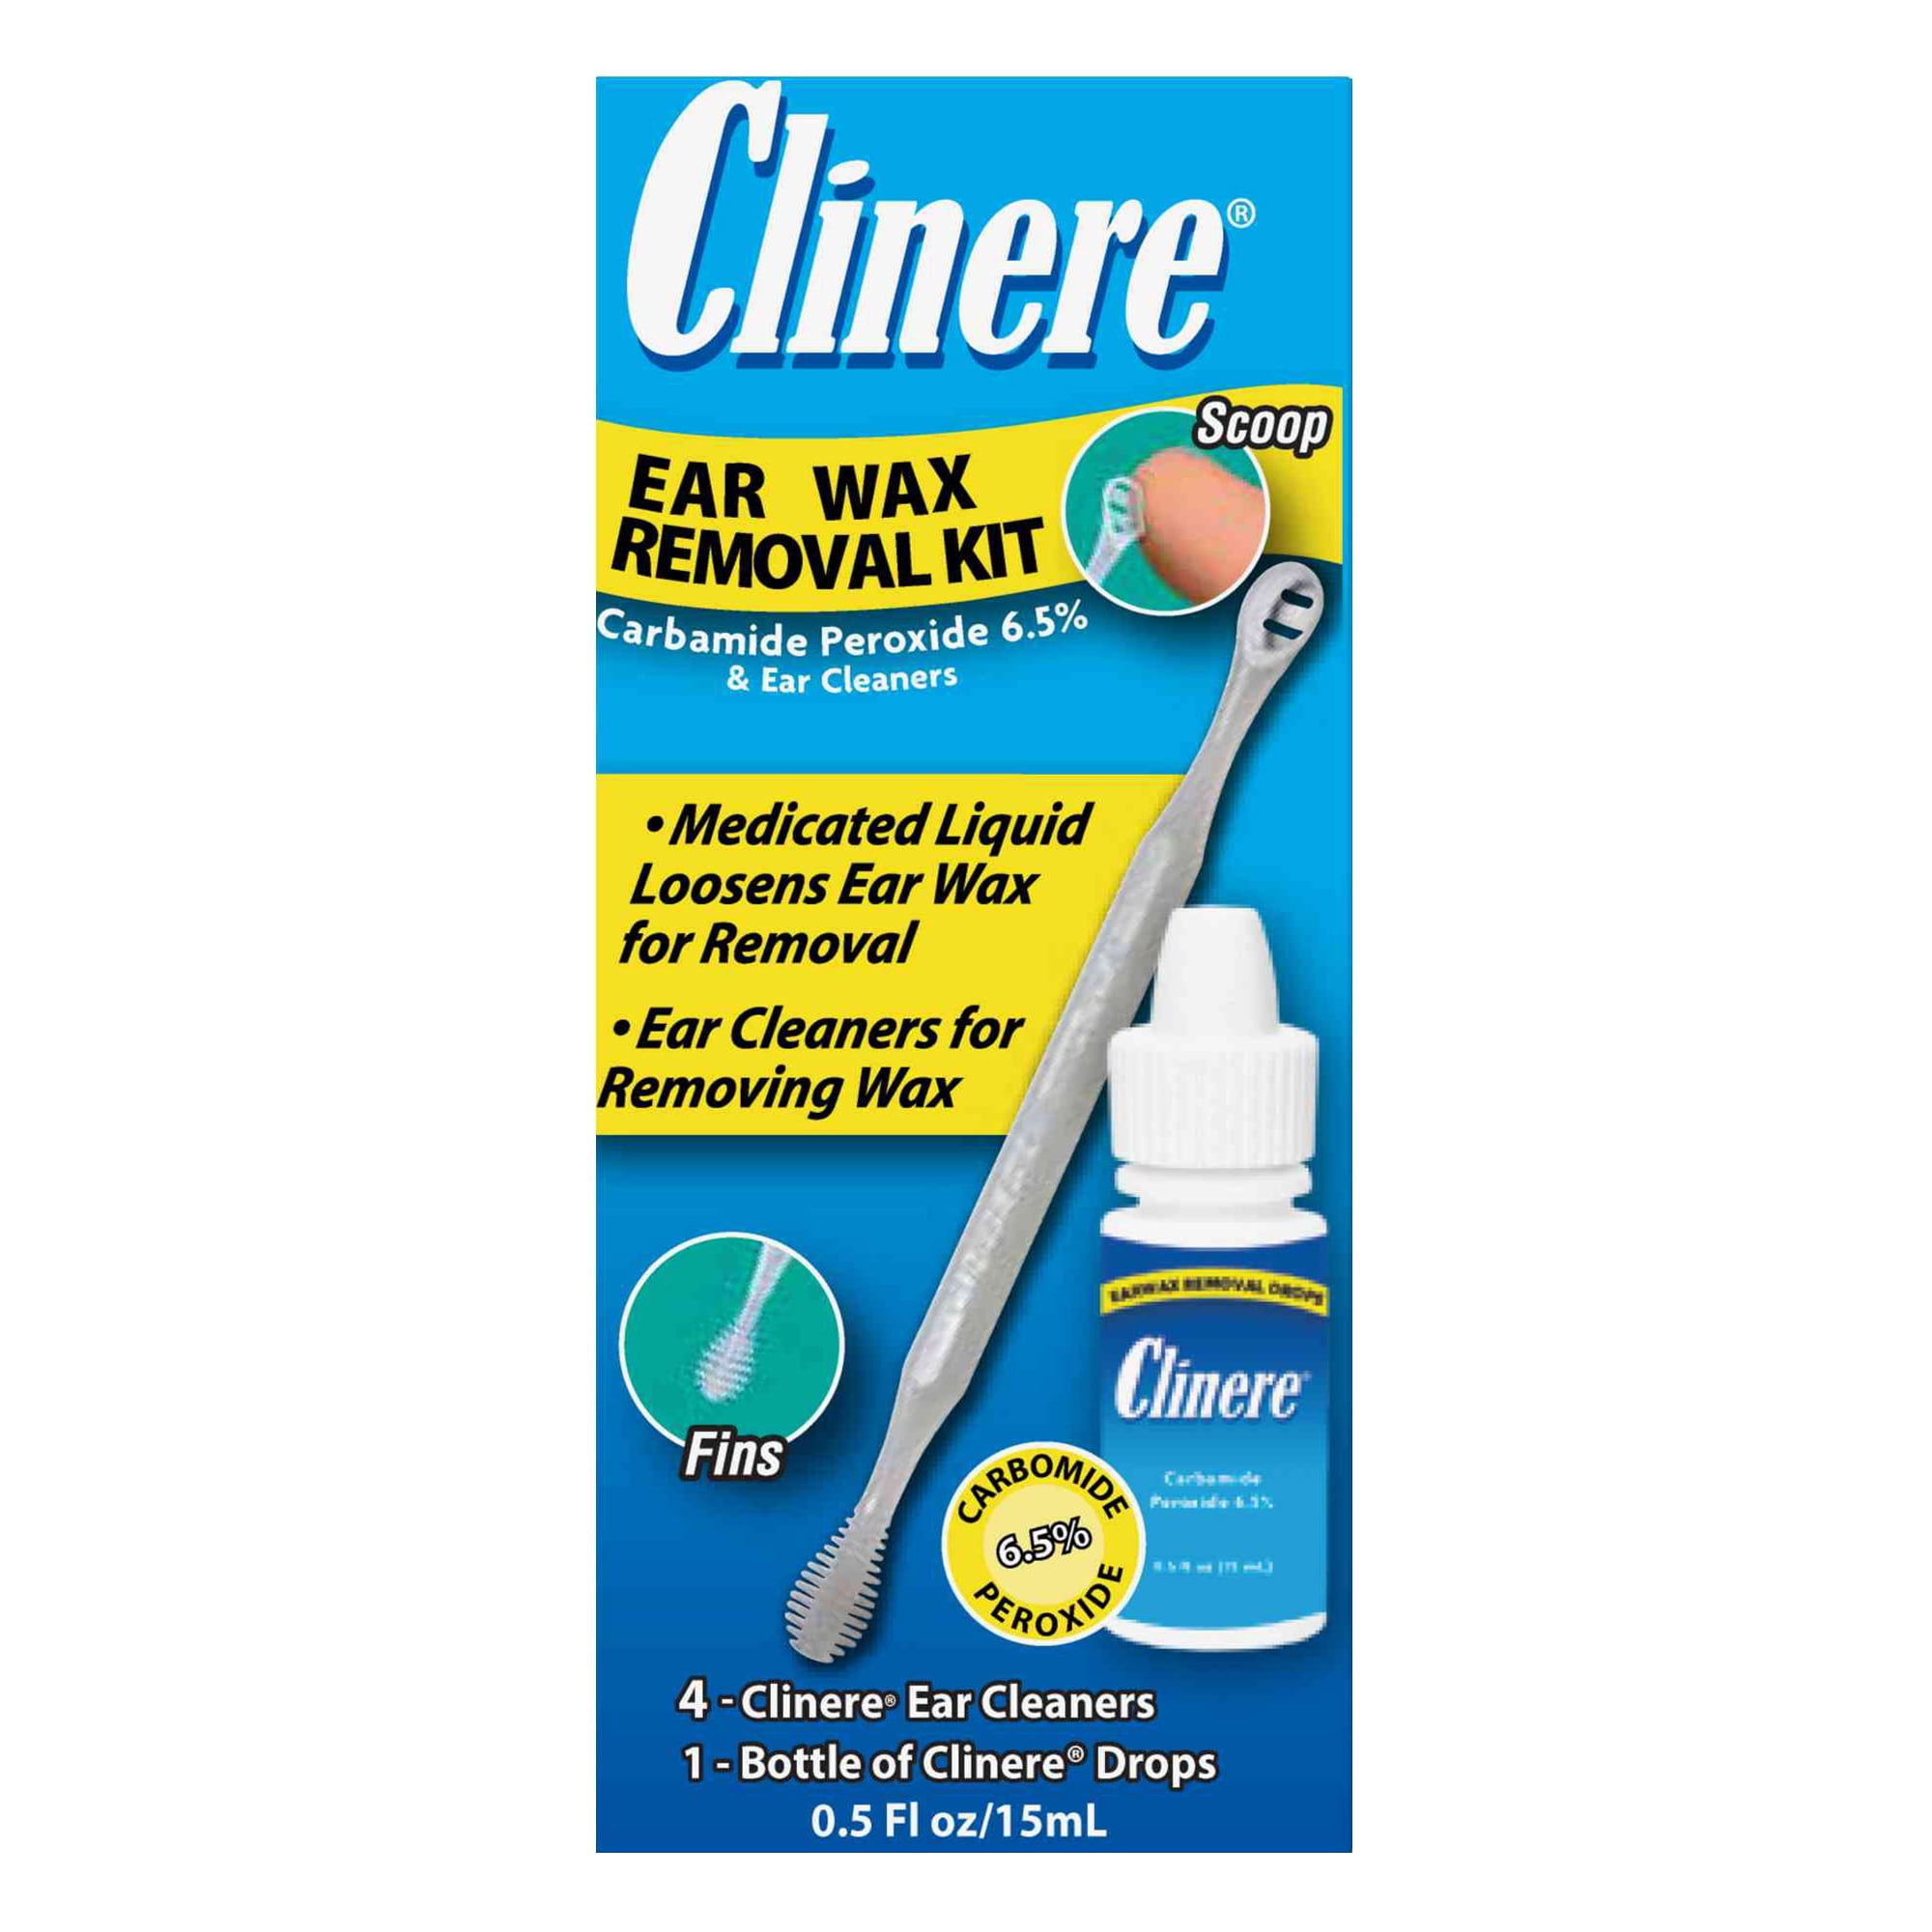 Clinere Carbamide Peroxide Ear Care Kit